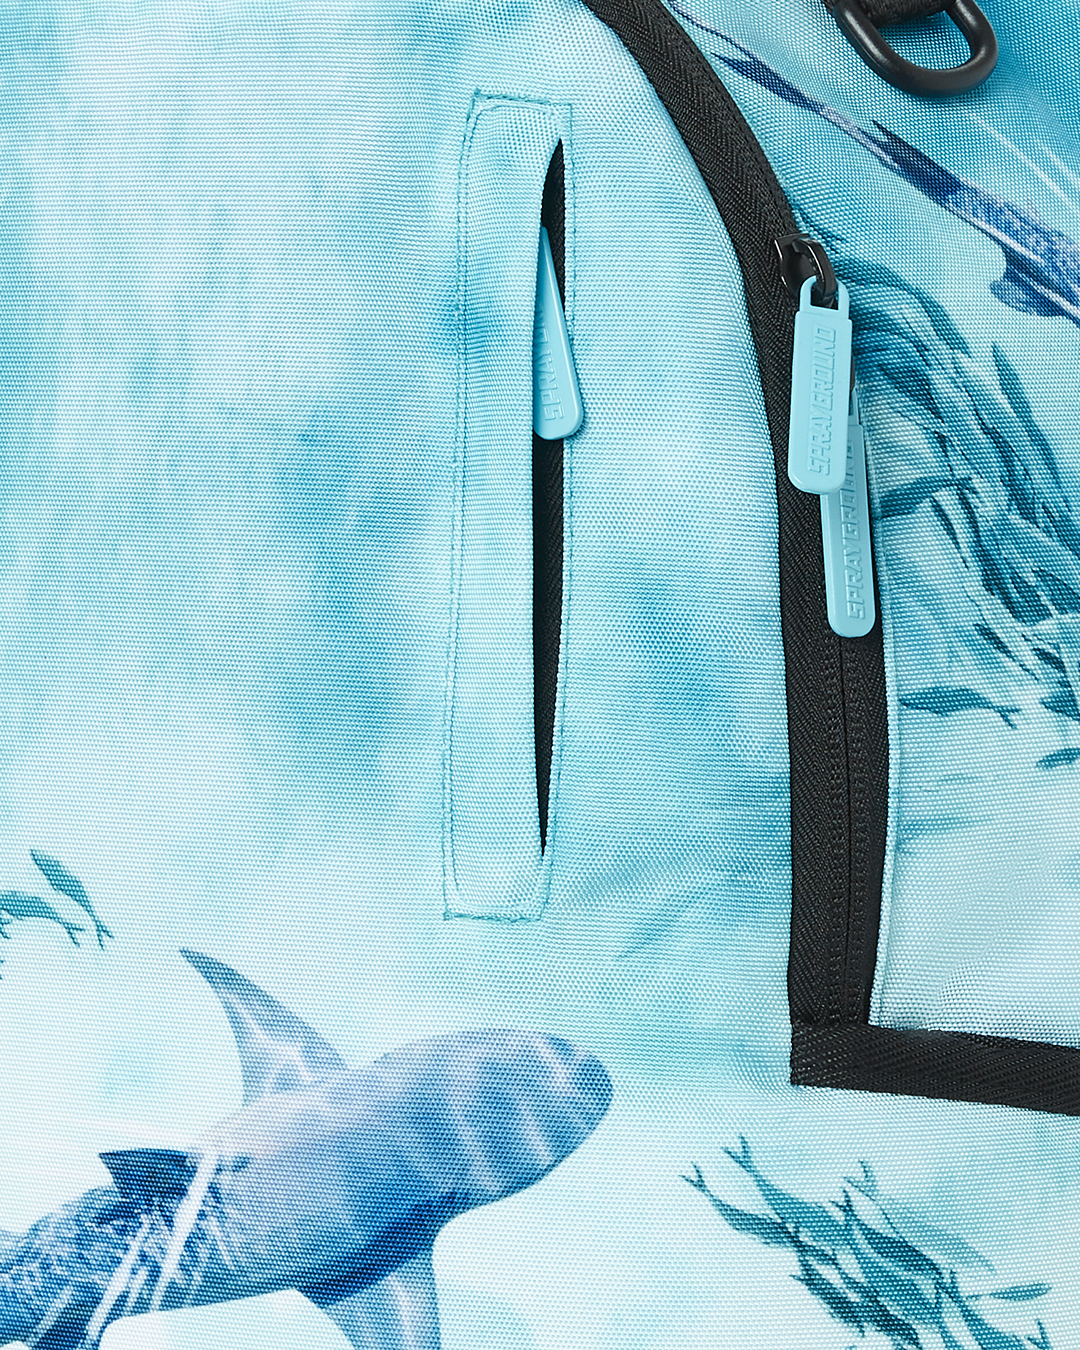 Backpack Sprayground BLOSSOM SHARK Turquoise